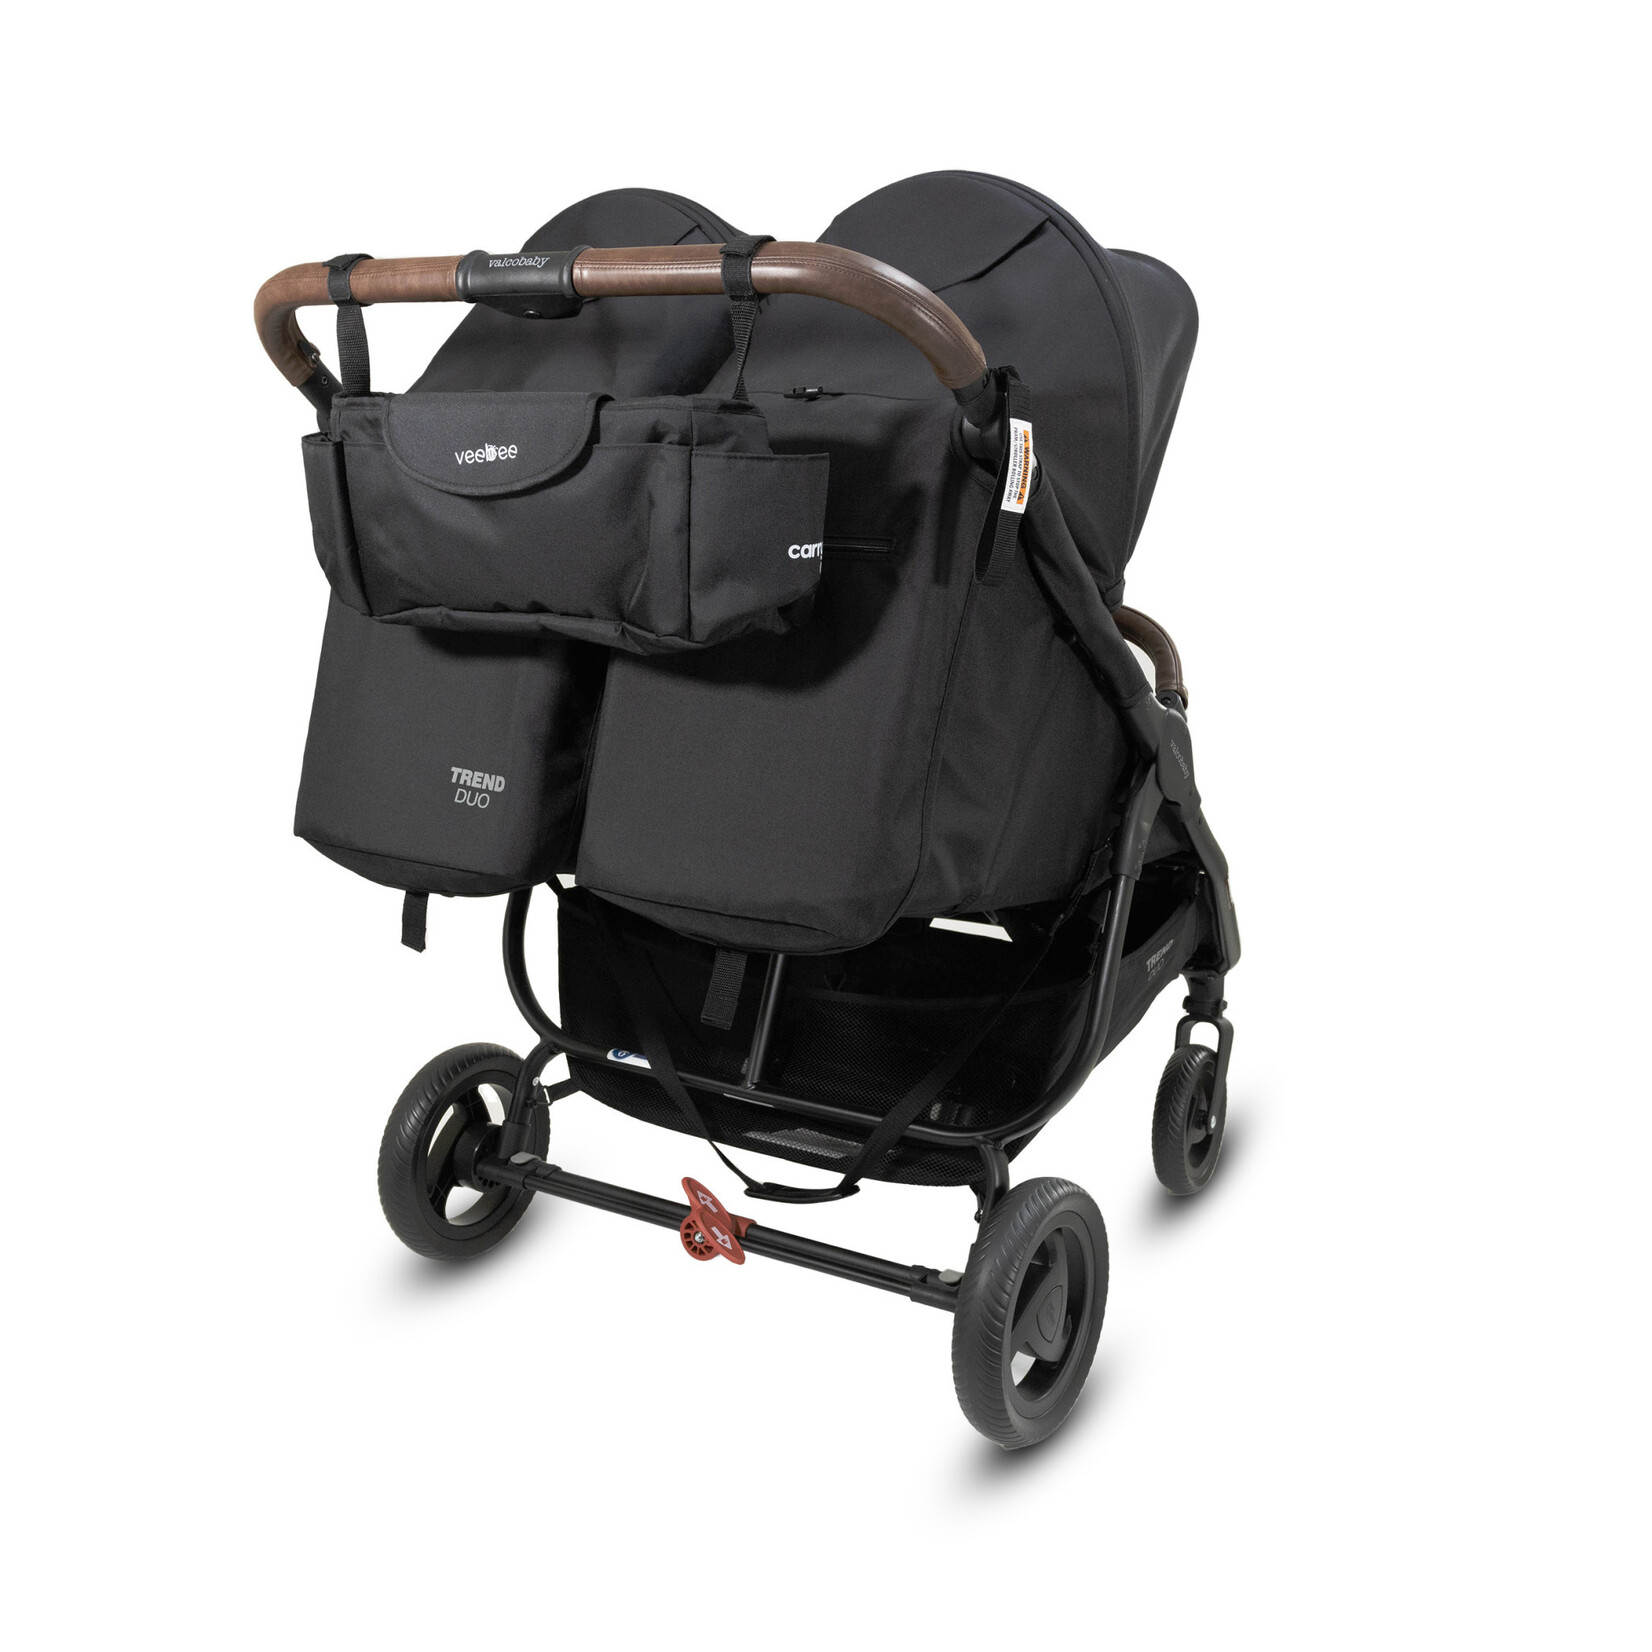 VeeBee Carry All Stroller Caddy(A0188)